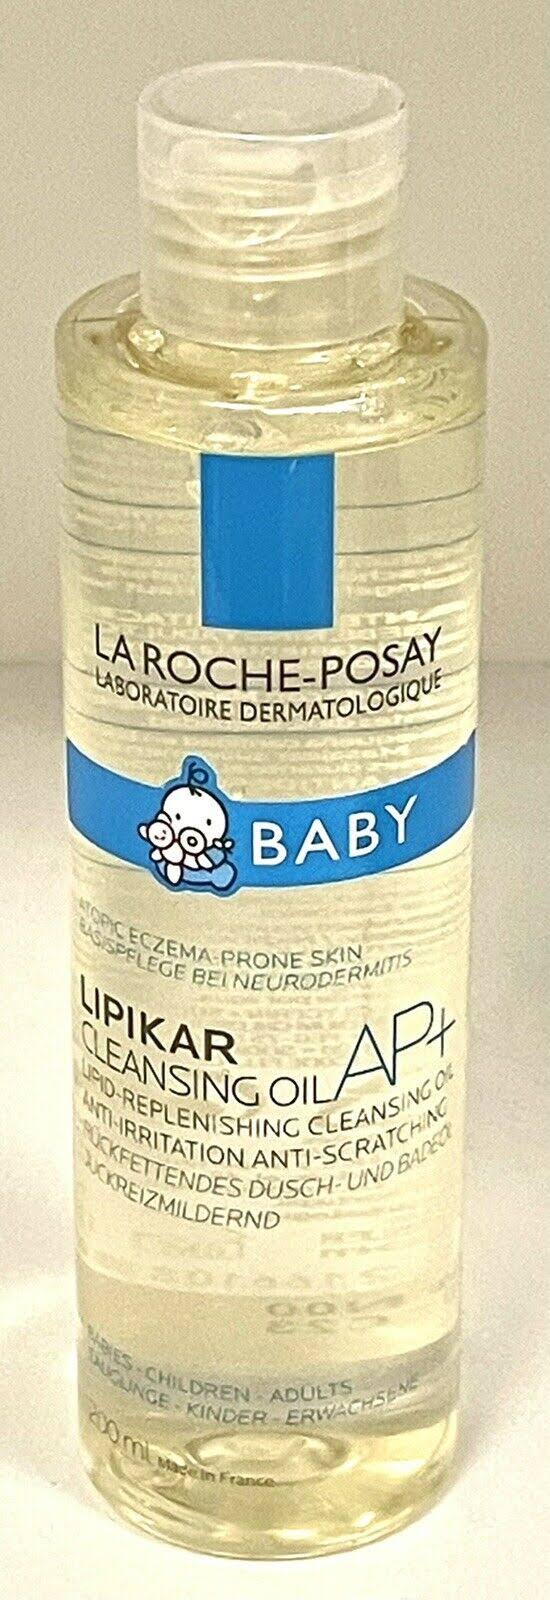 La Roche-Posay Baby Lipikar Lipid-Replenishing Cleansing Bath Oil 200ml